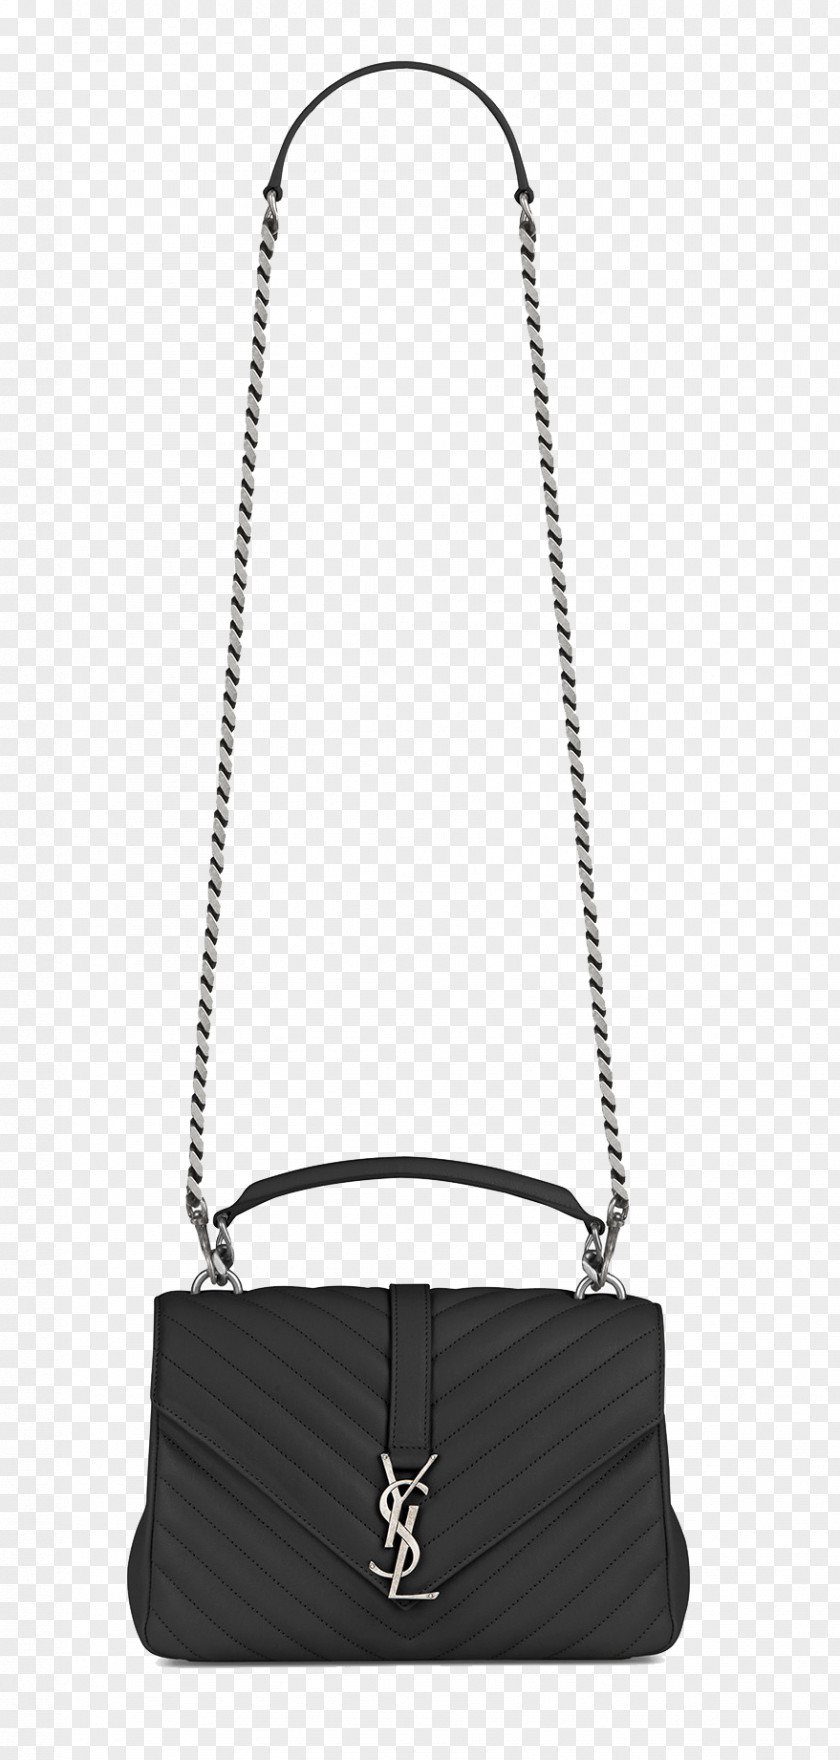 SaintLaurent Chain Bag Yves Saint Laurent Handbag Leather Hermxe8s PNG